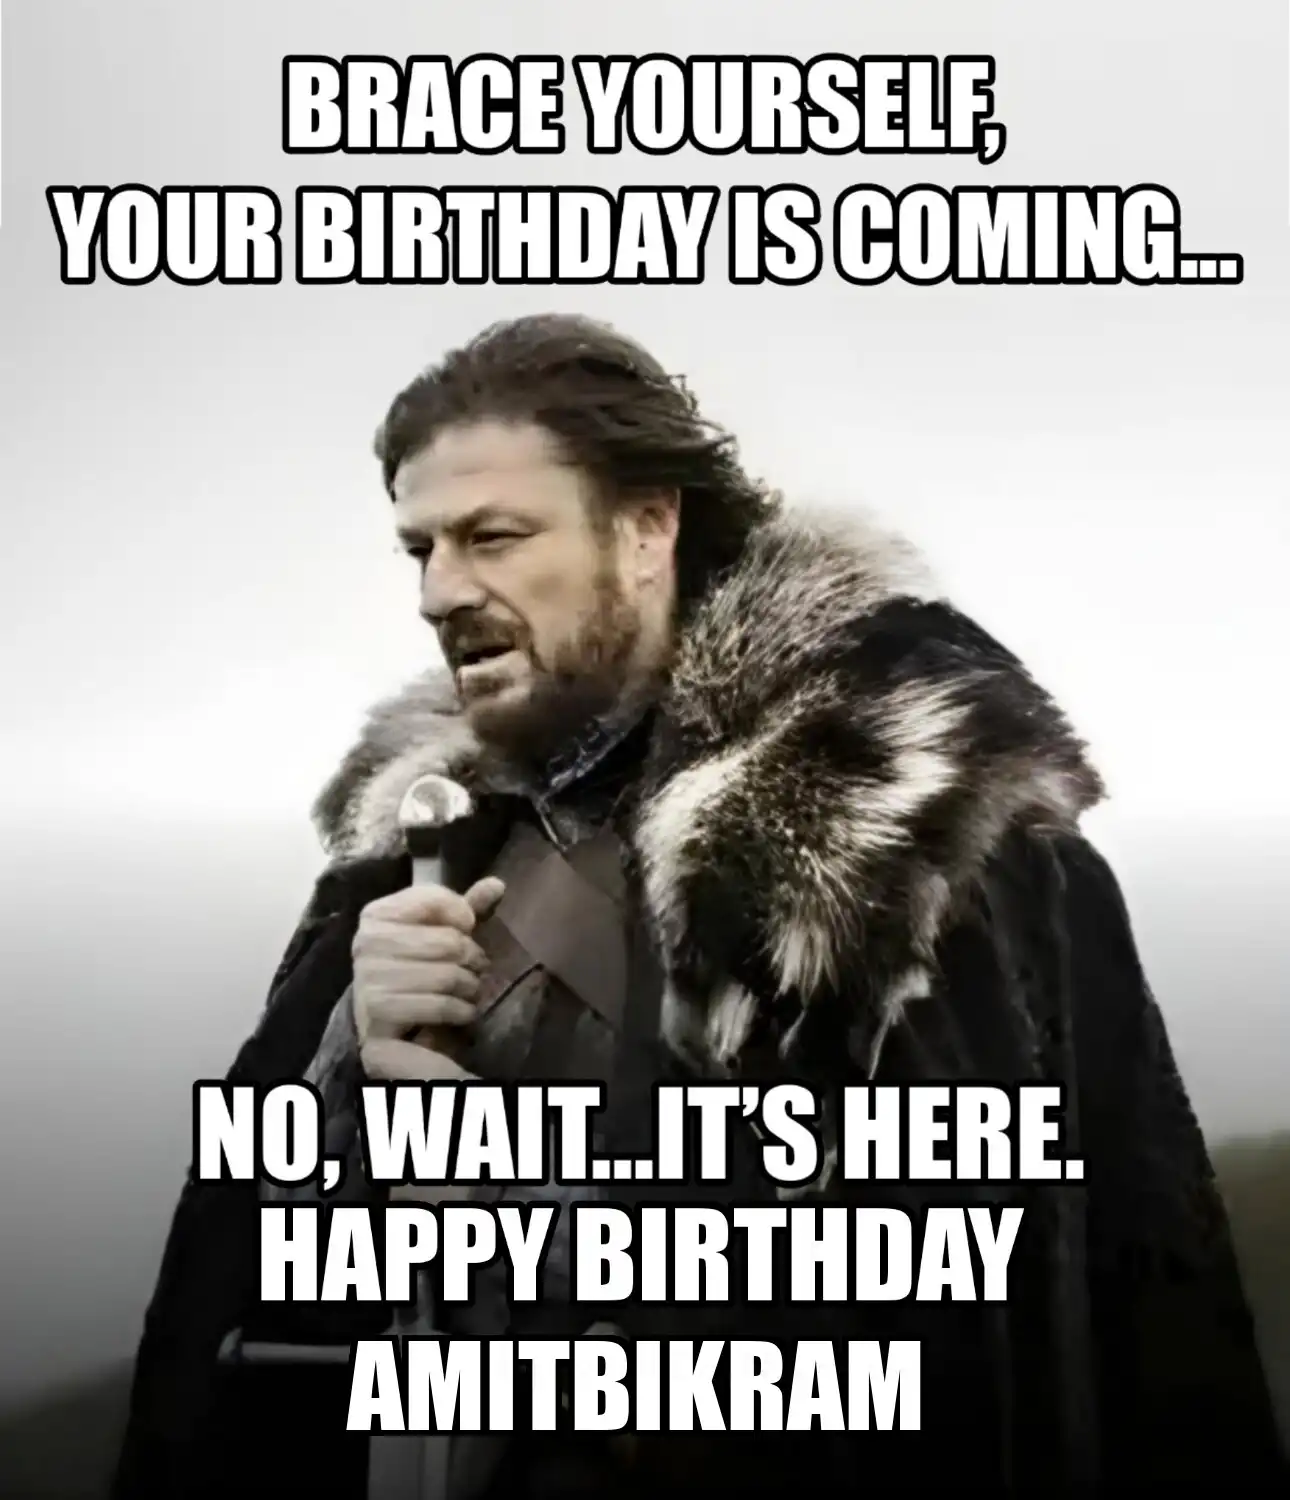 Happy Birthday Amitbikram Brace Yourself Your Birthday Is Coming Meme